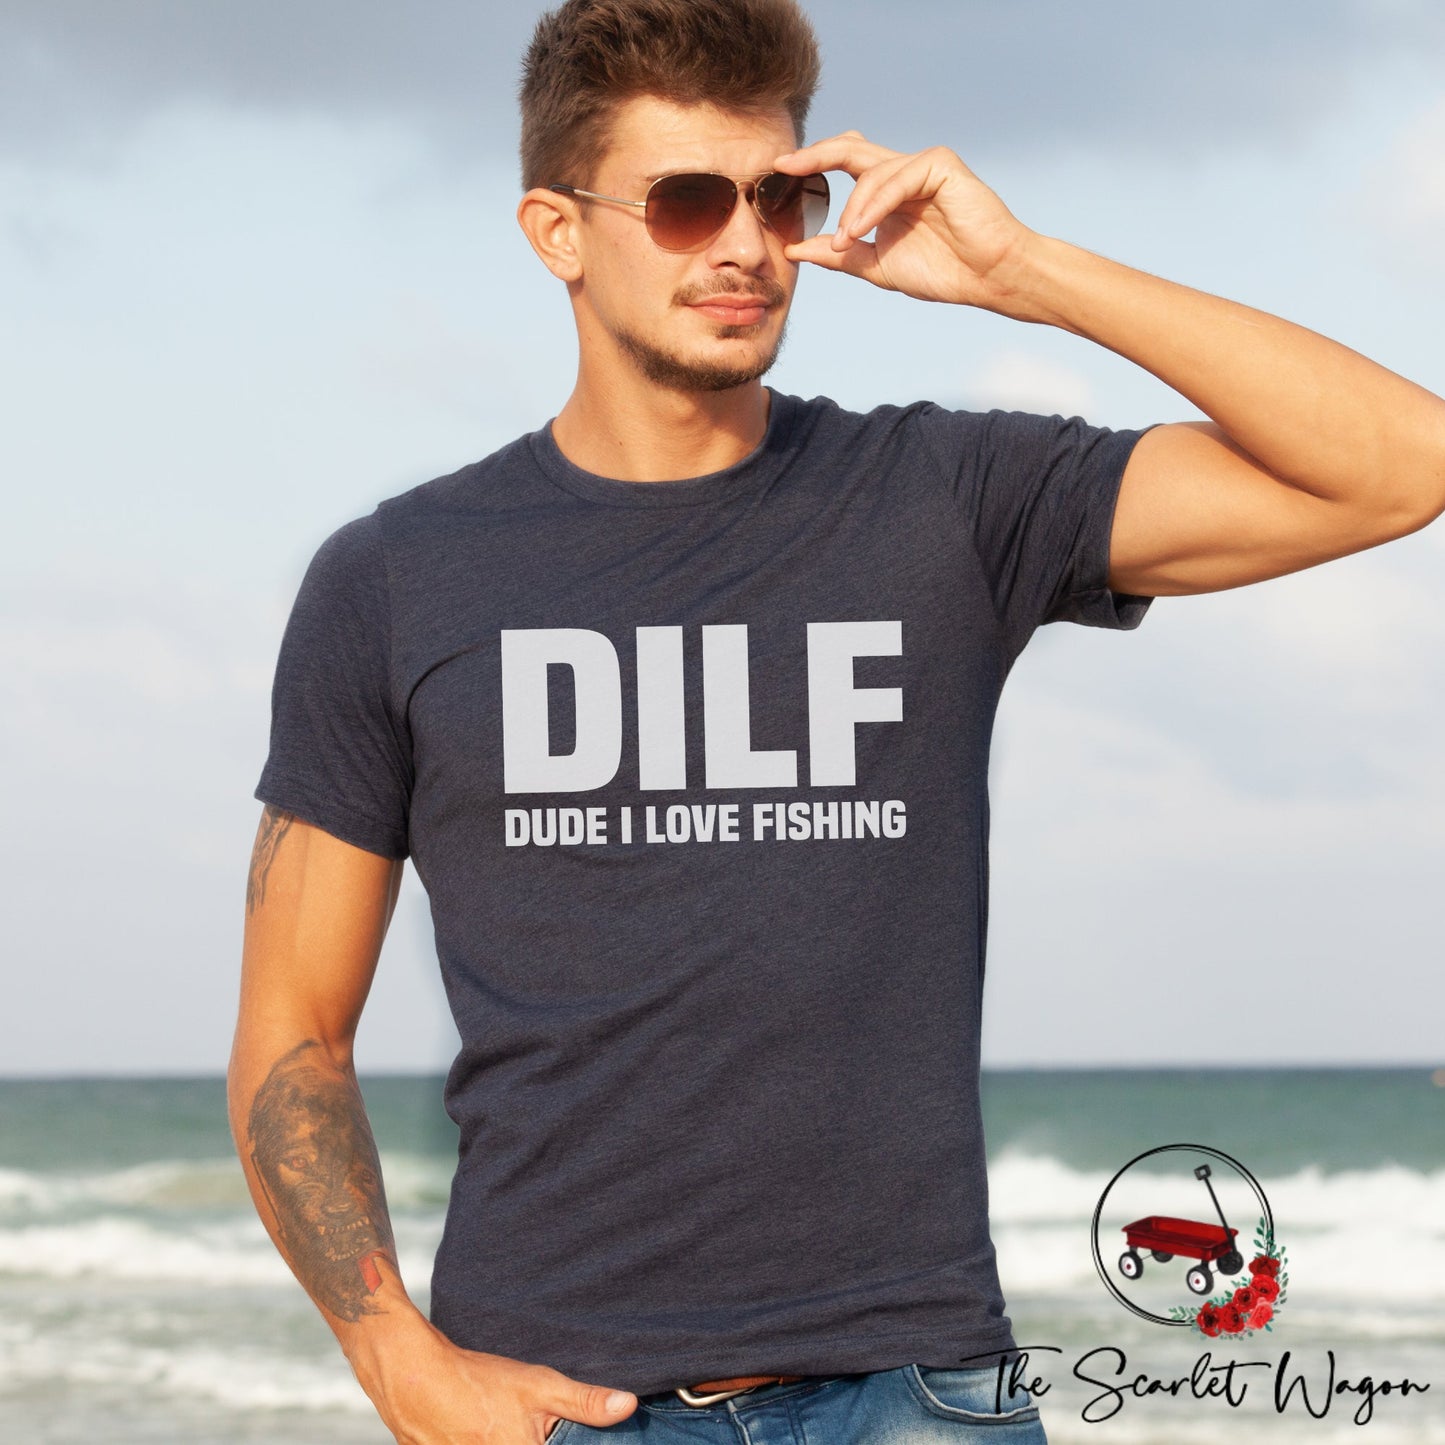 DILF - Dude I Love Fishing Premium Tee Scarlet Wagon 